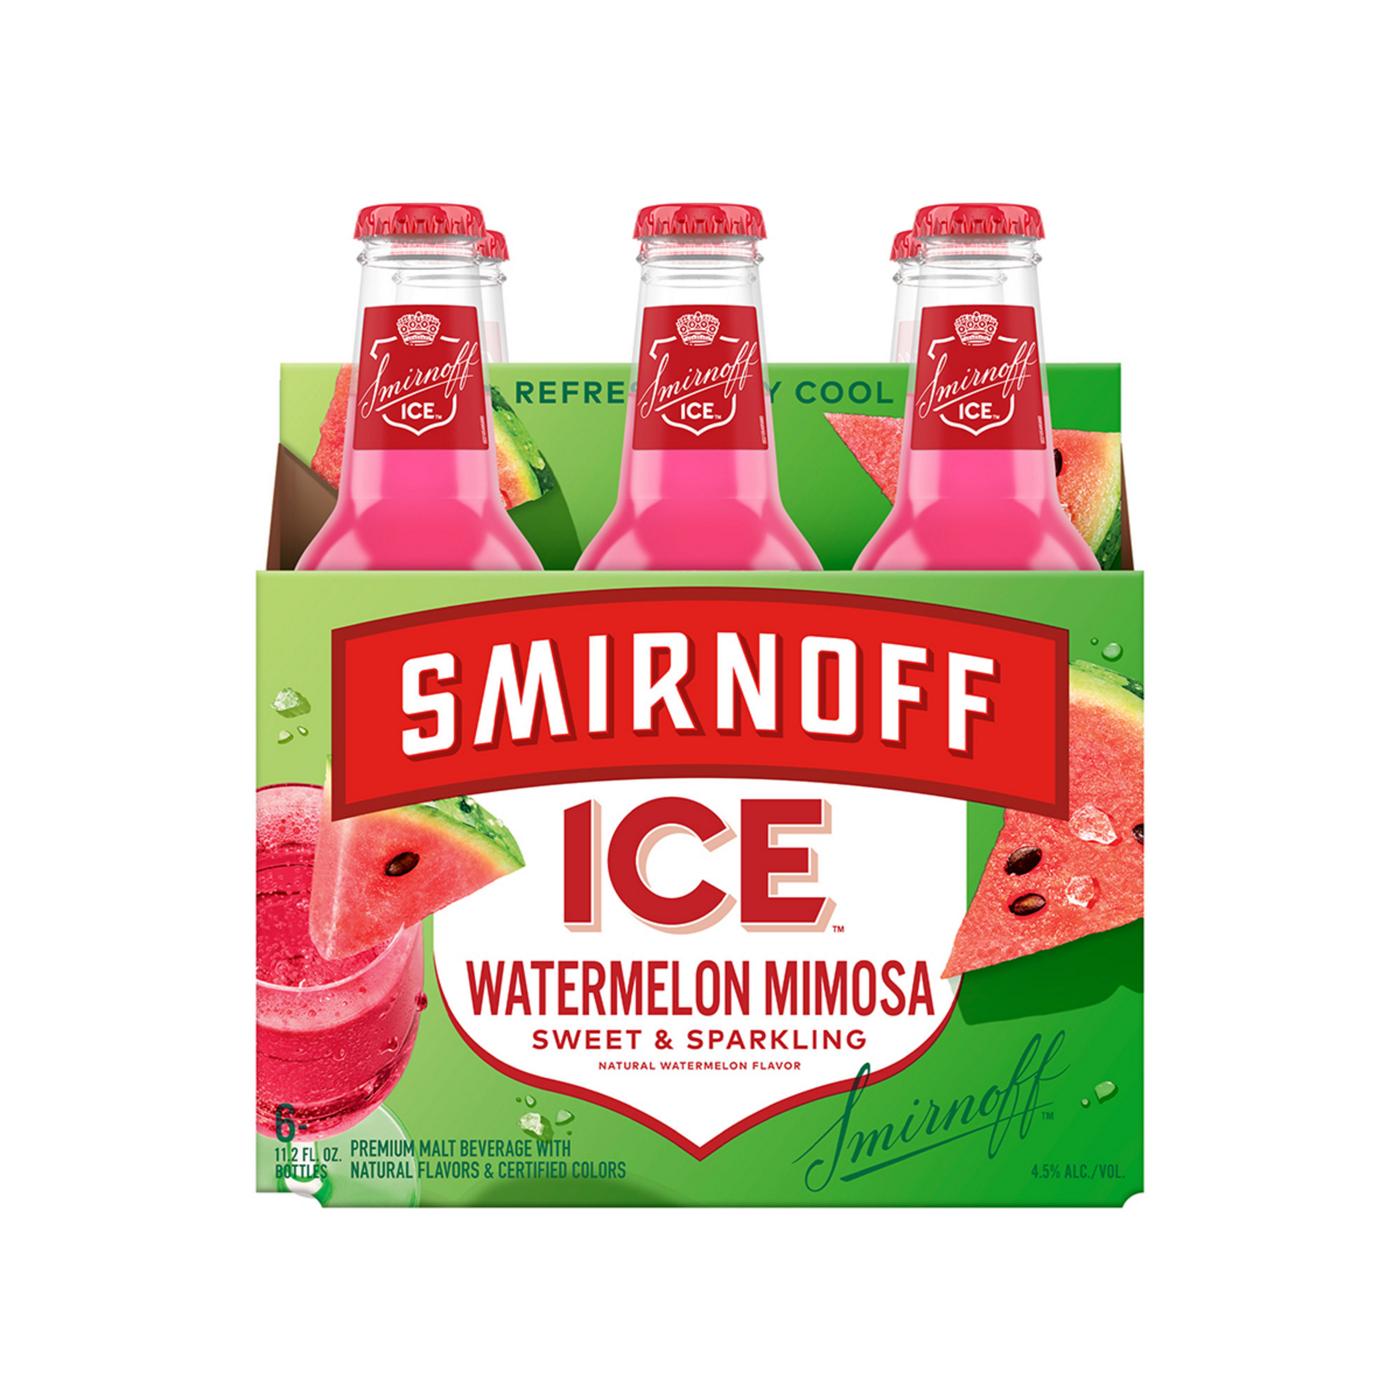 Smirnoff Ice Watermelon Mimosa; image 2 of 5